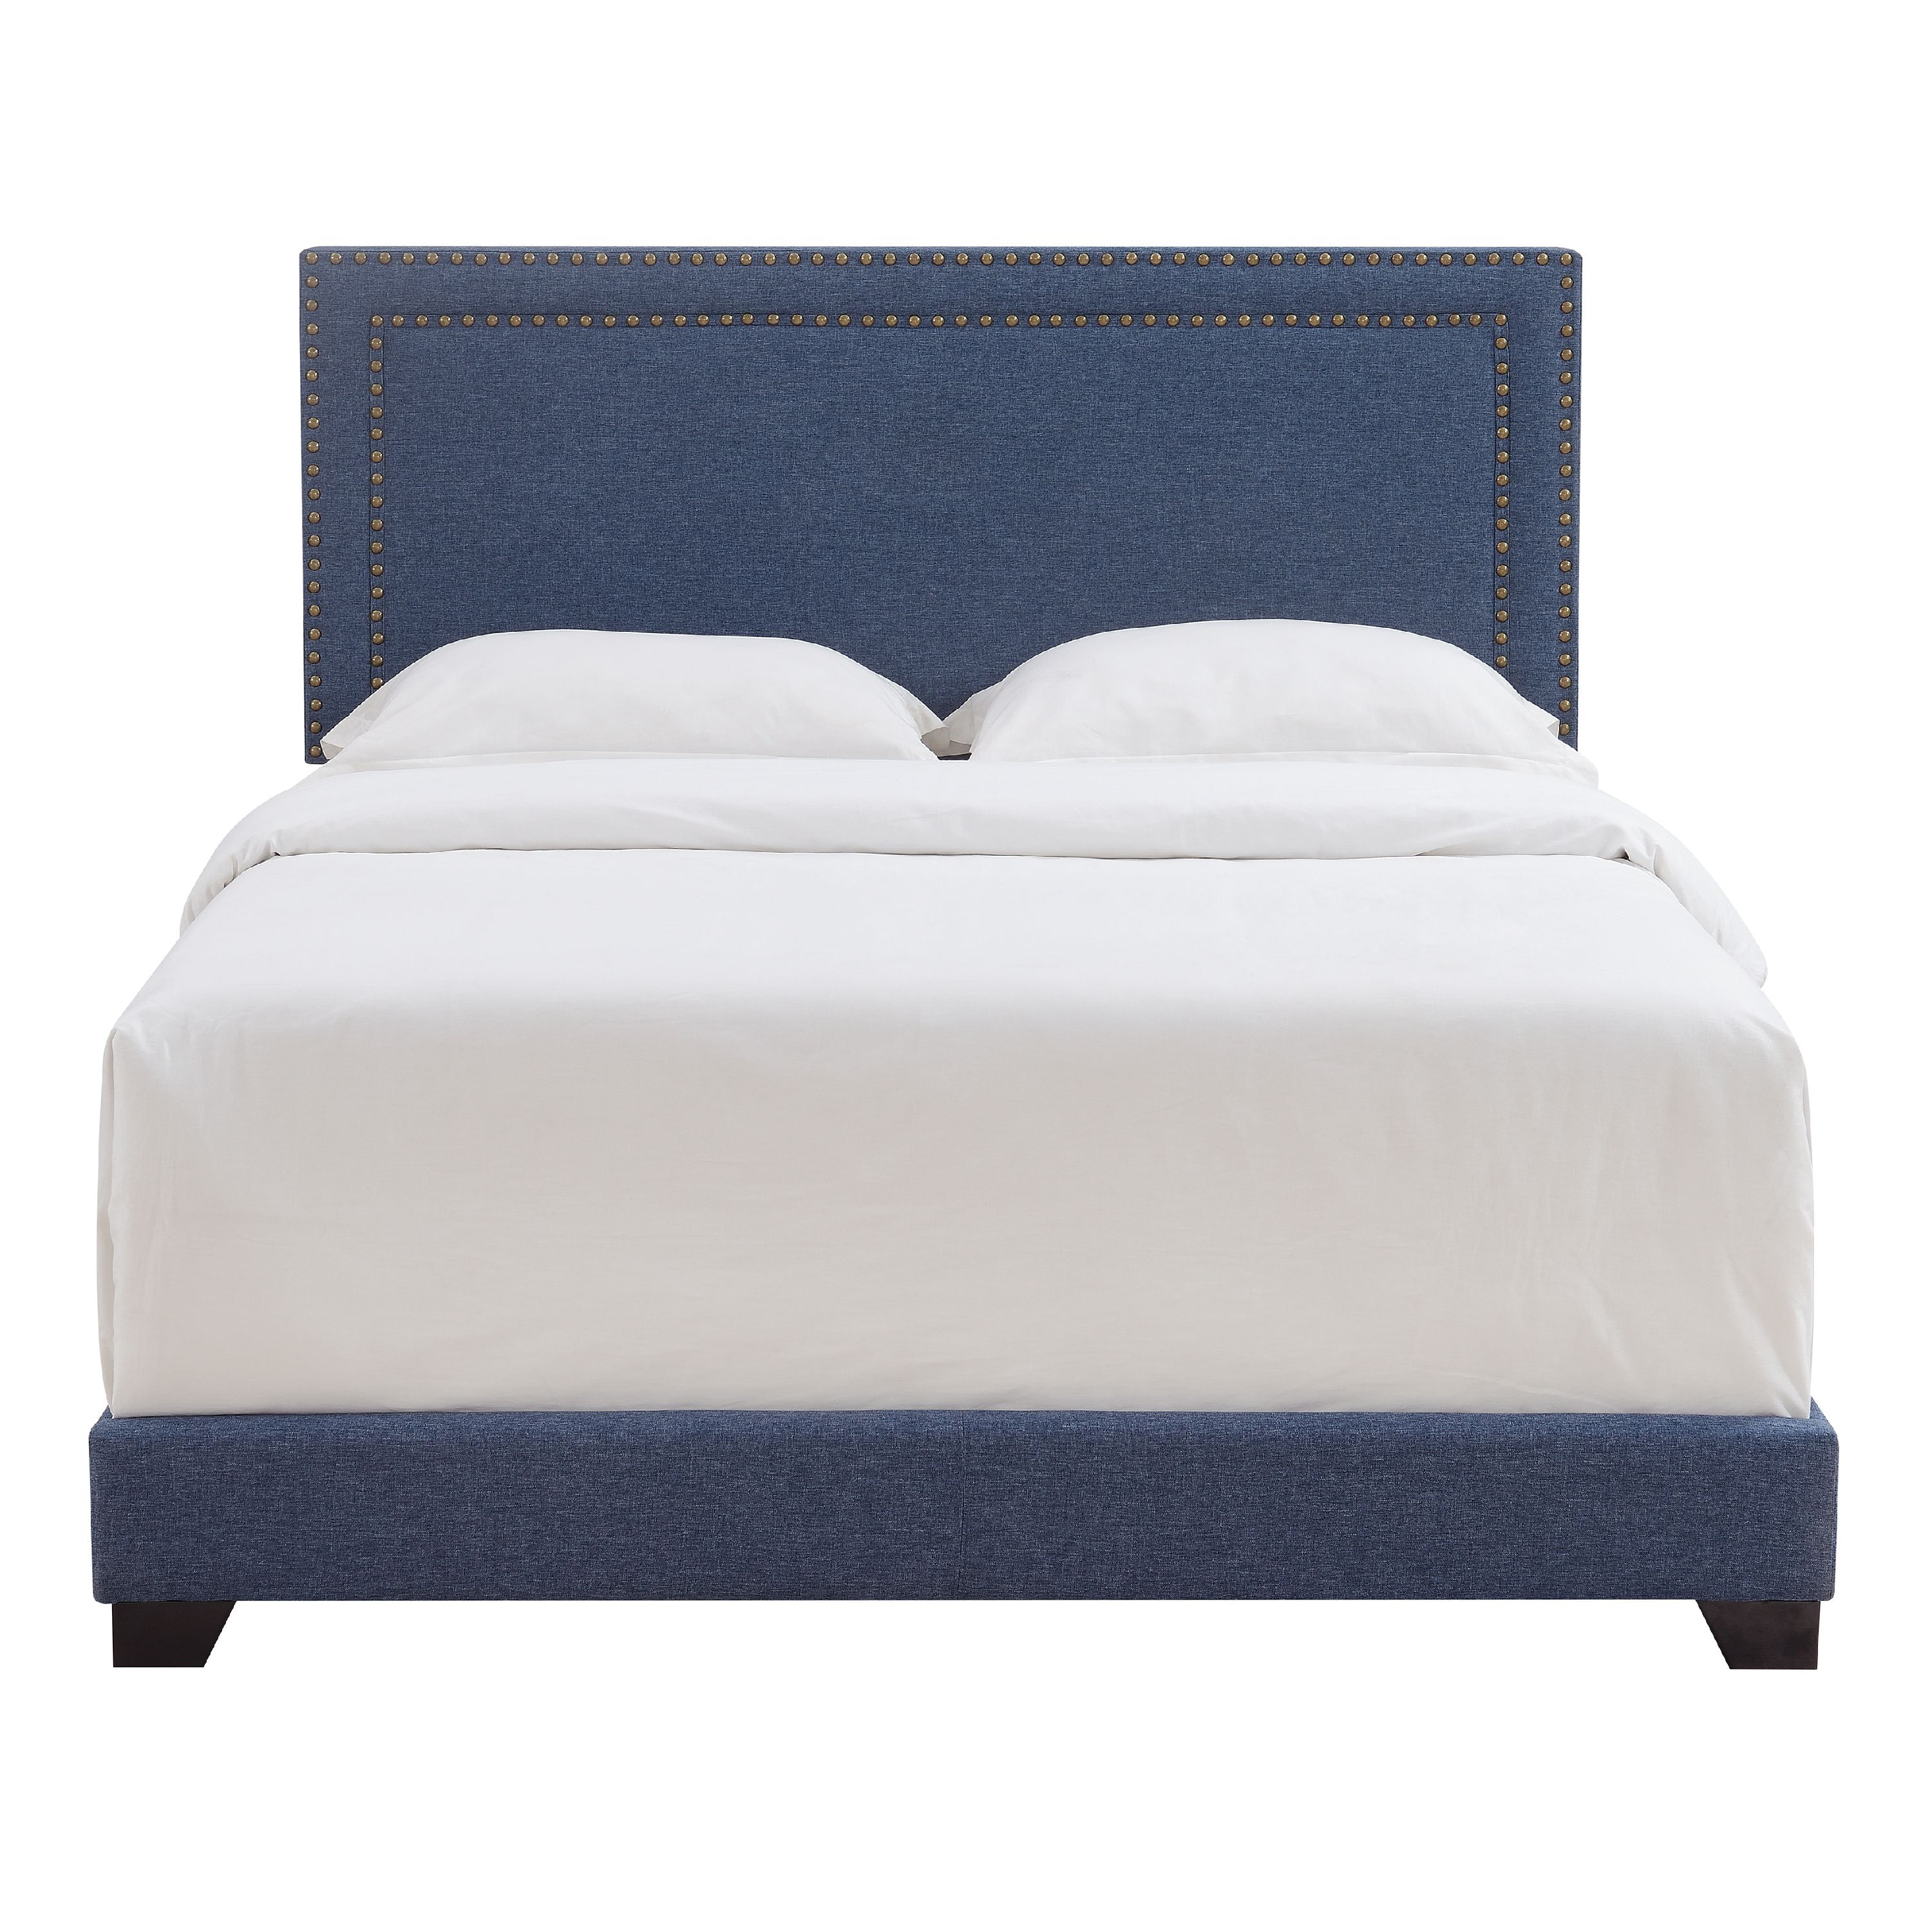 Willow Nailhead Trim Upholstered Queen Bed, Denim Fabric - Walmart.com